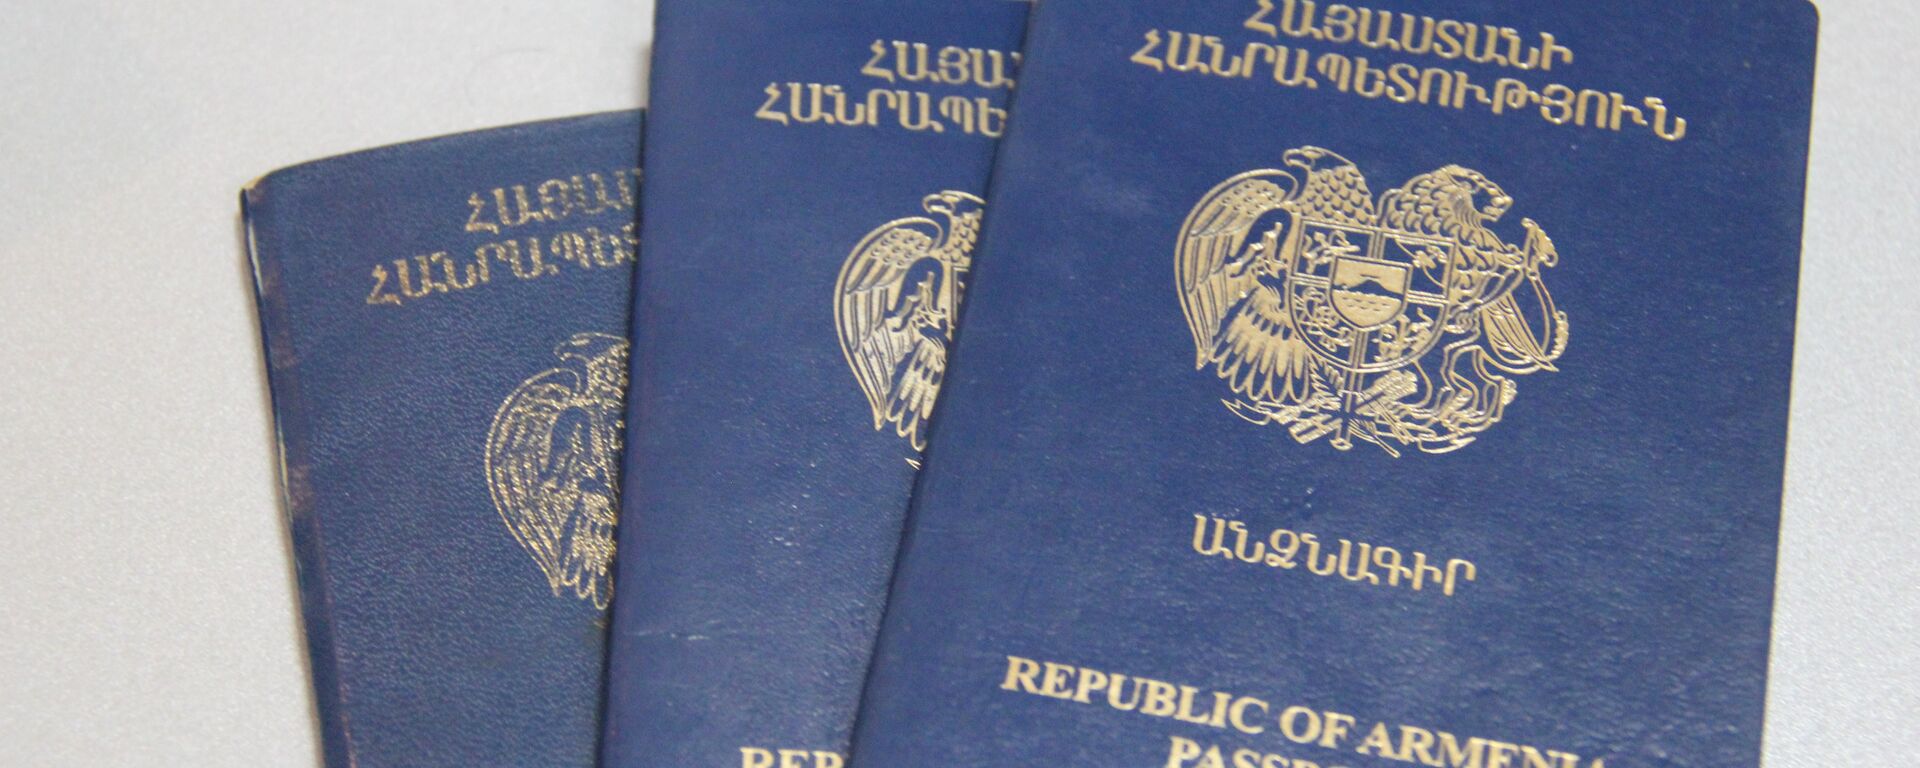 Паспорт Республики Армения